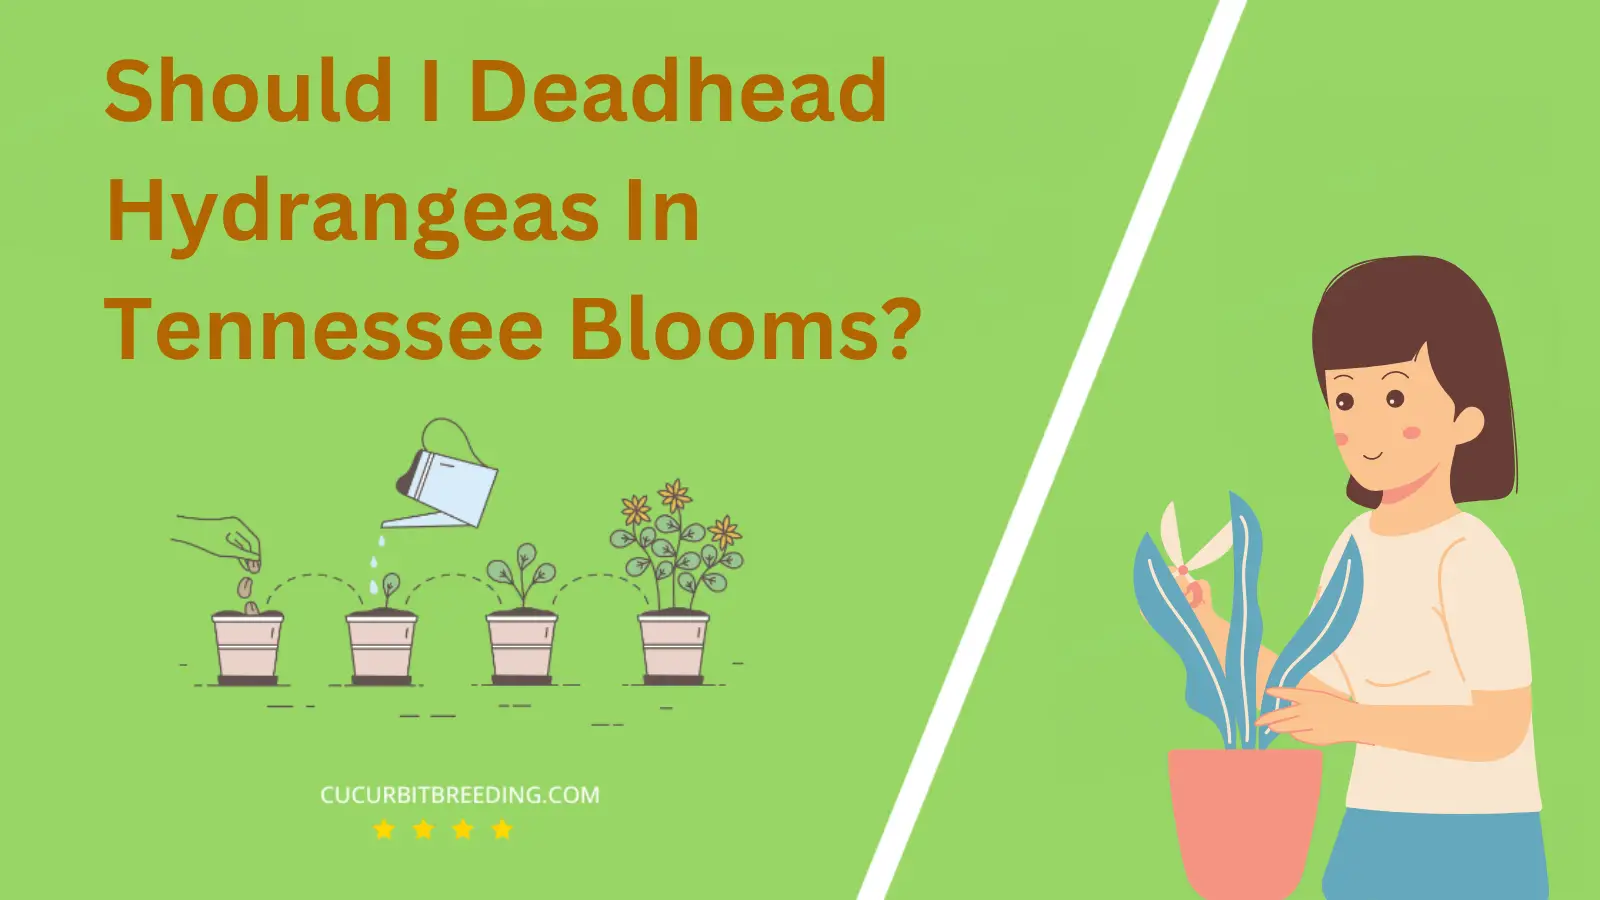 Should I Deadhead Hydrangeas In Tennessee Blooms?